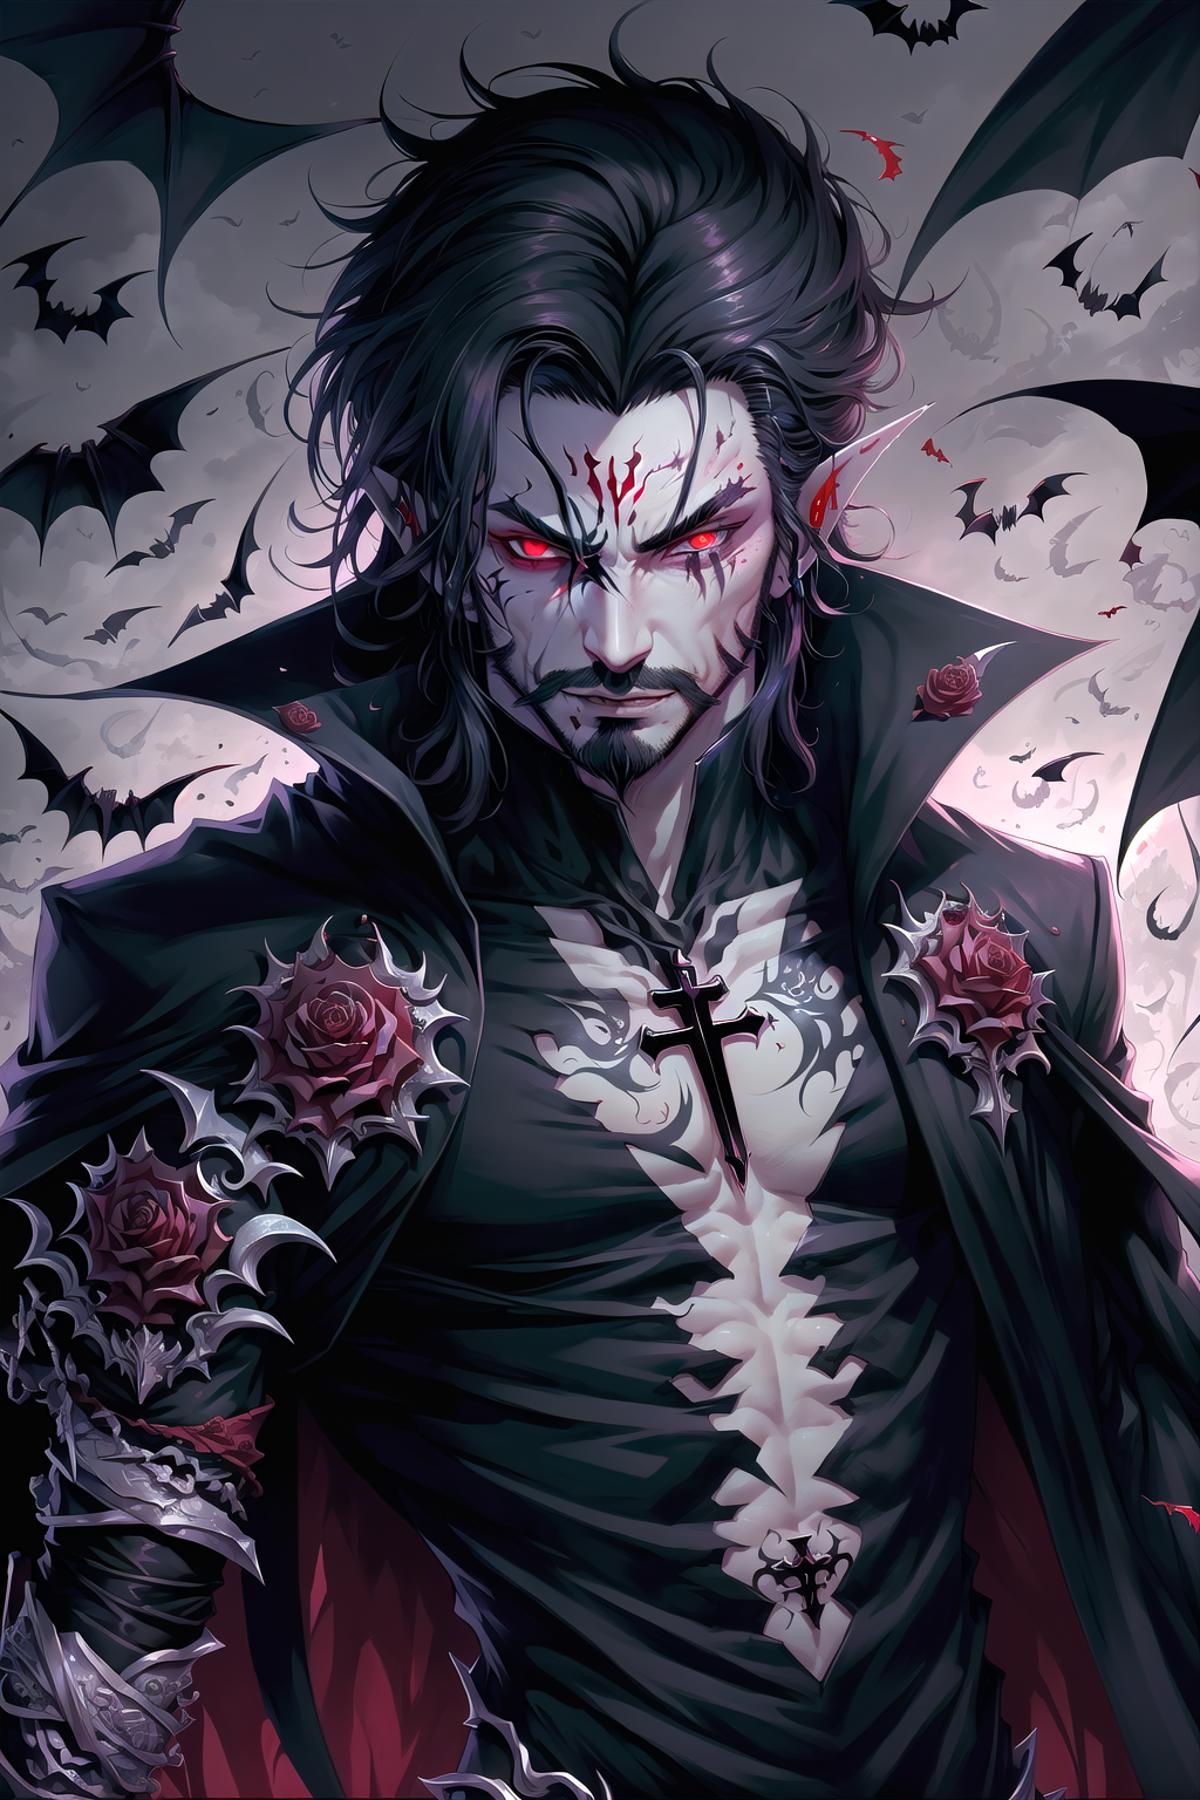 Vampires image by duskfallcrew